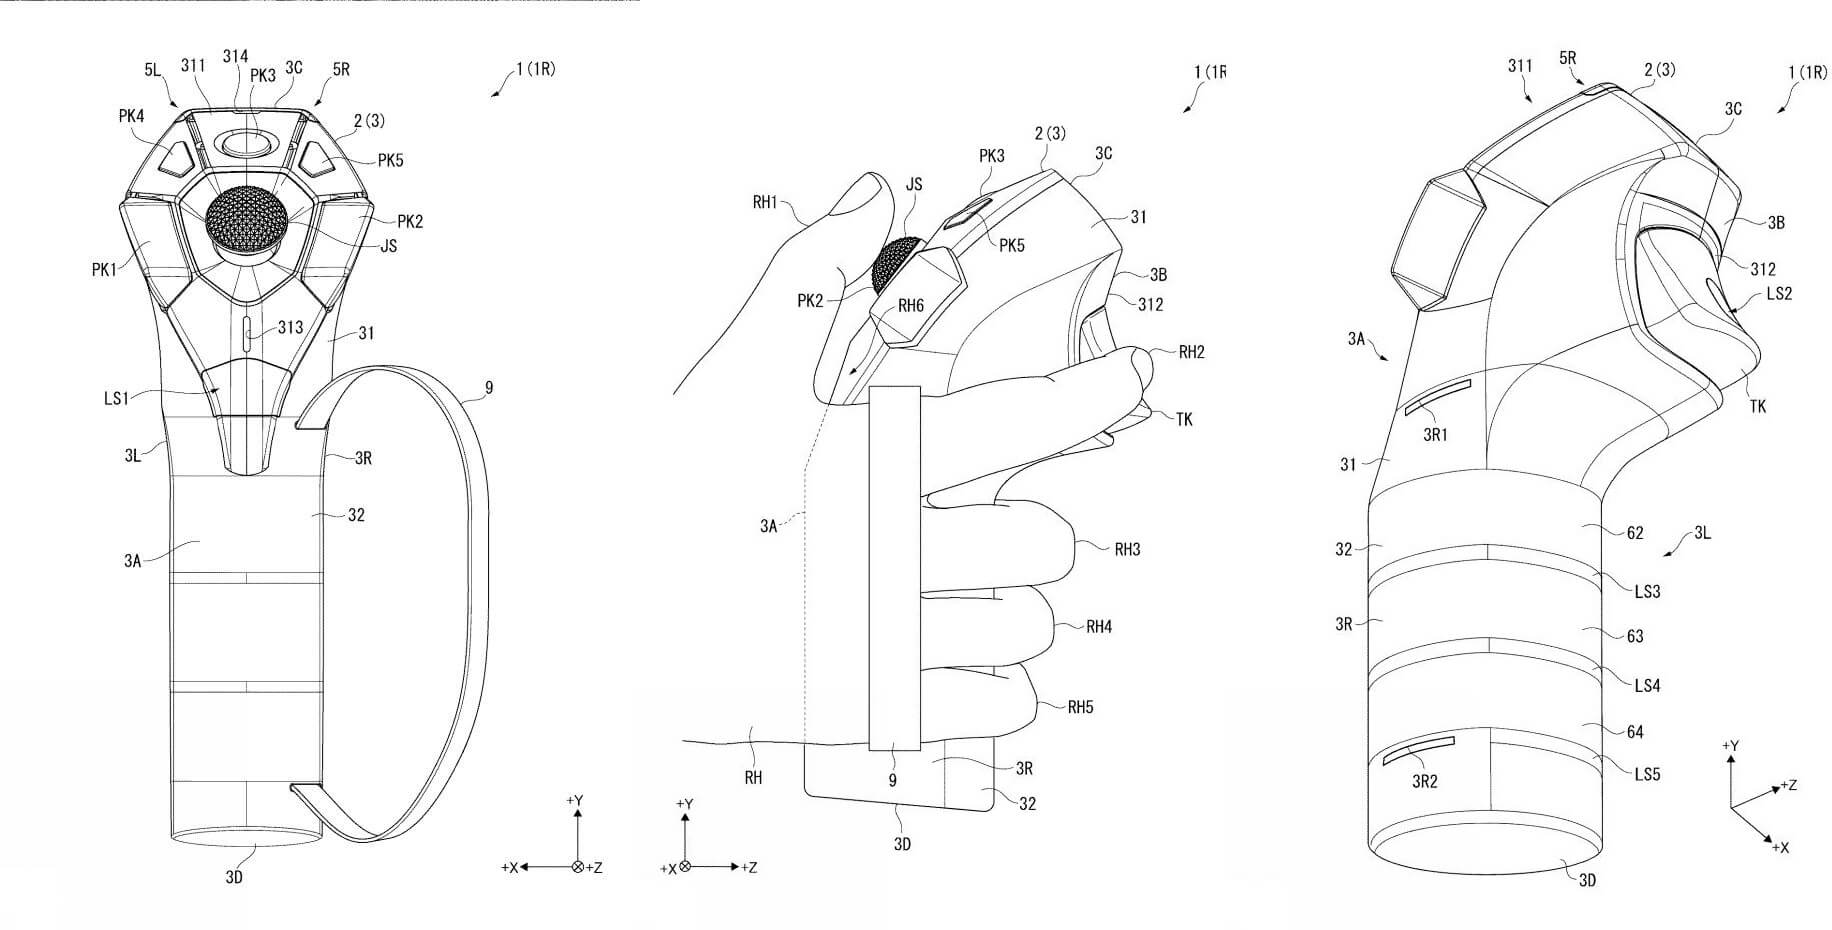 Patente de joystick para PlayStation VR